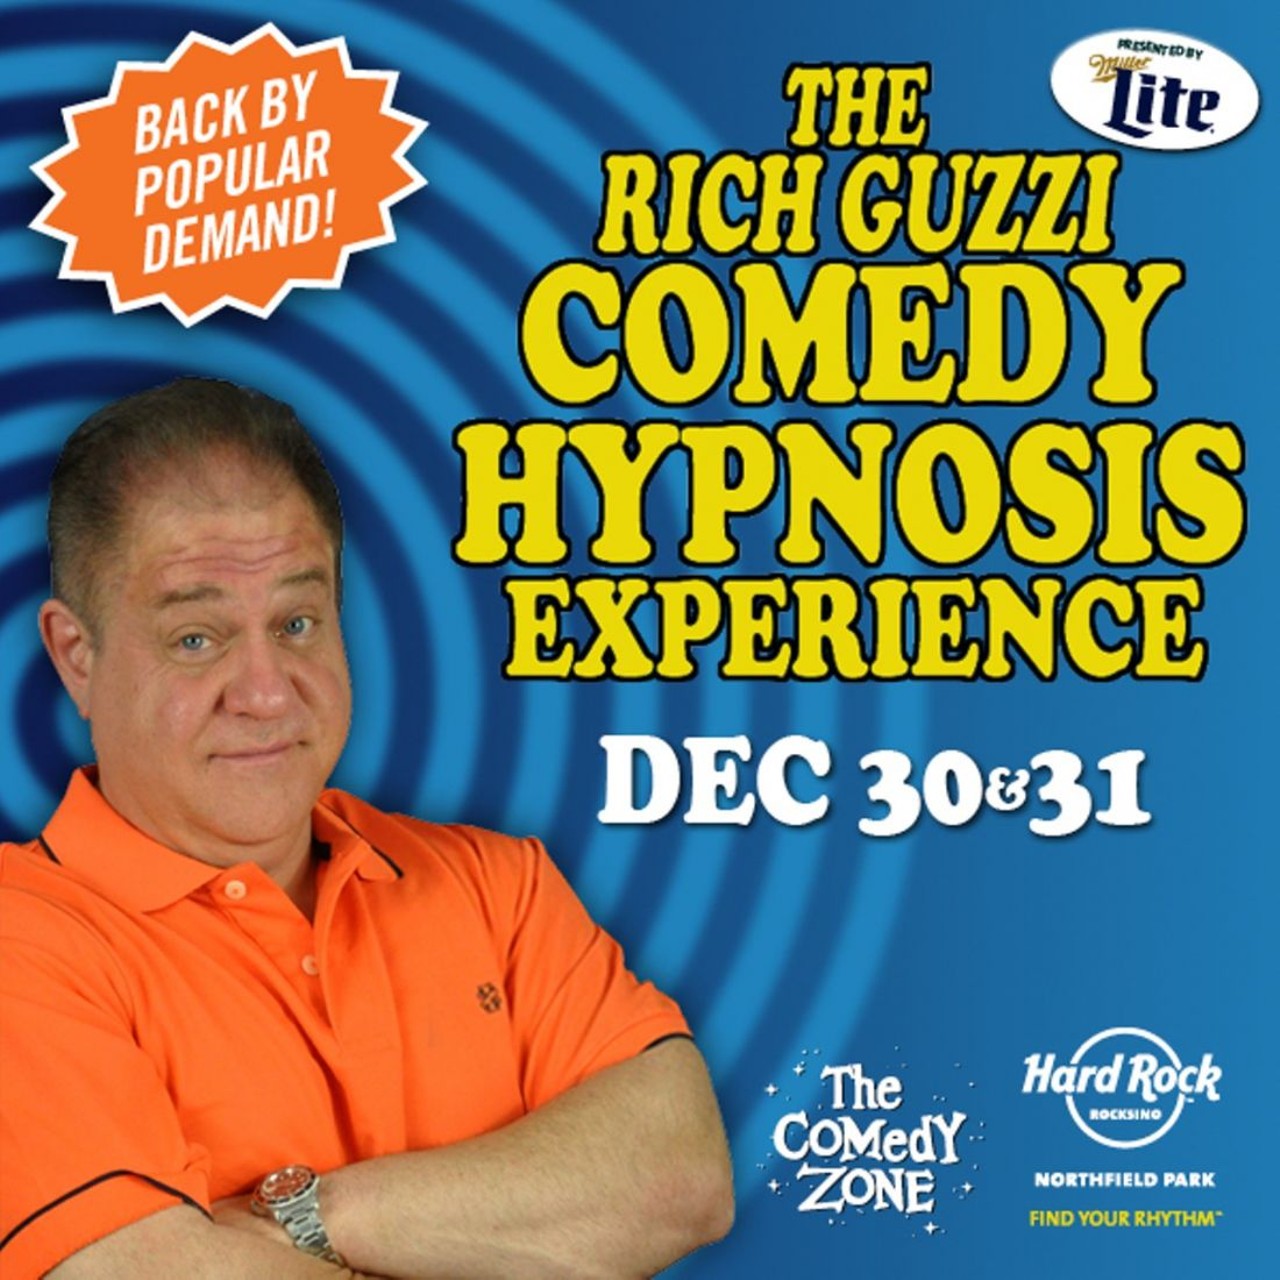 The Rich Guzzi Comic Hypnosis Experience 
Sat, Dec. 30-Sun, Dec. 31
Poster Art Provided